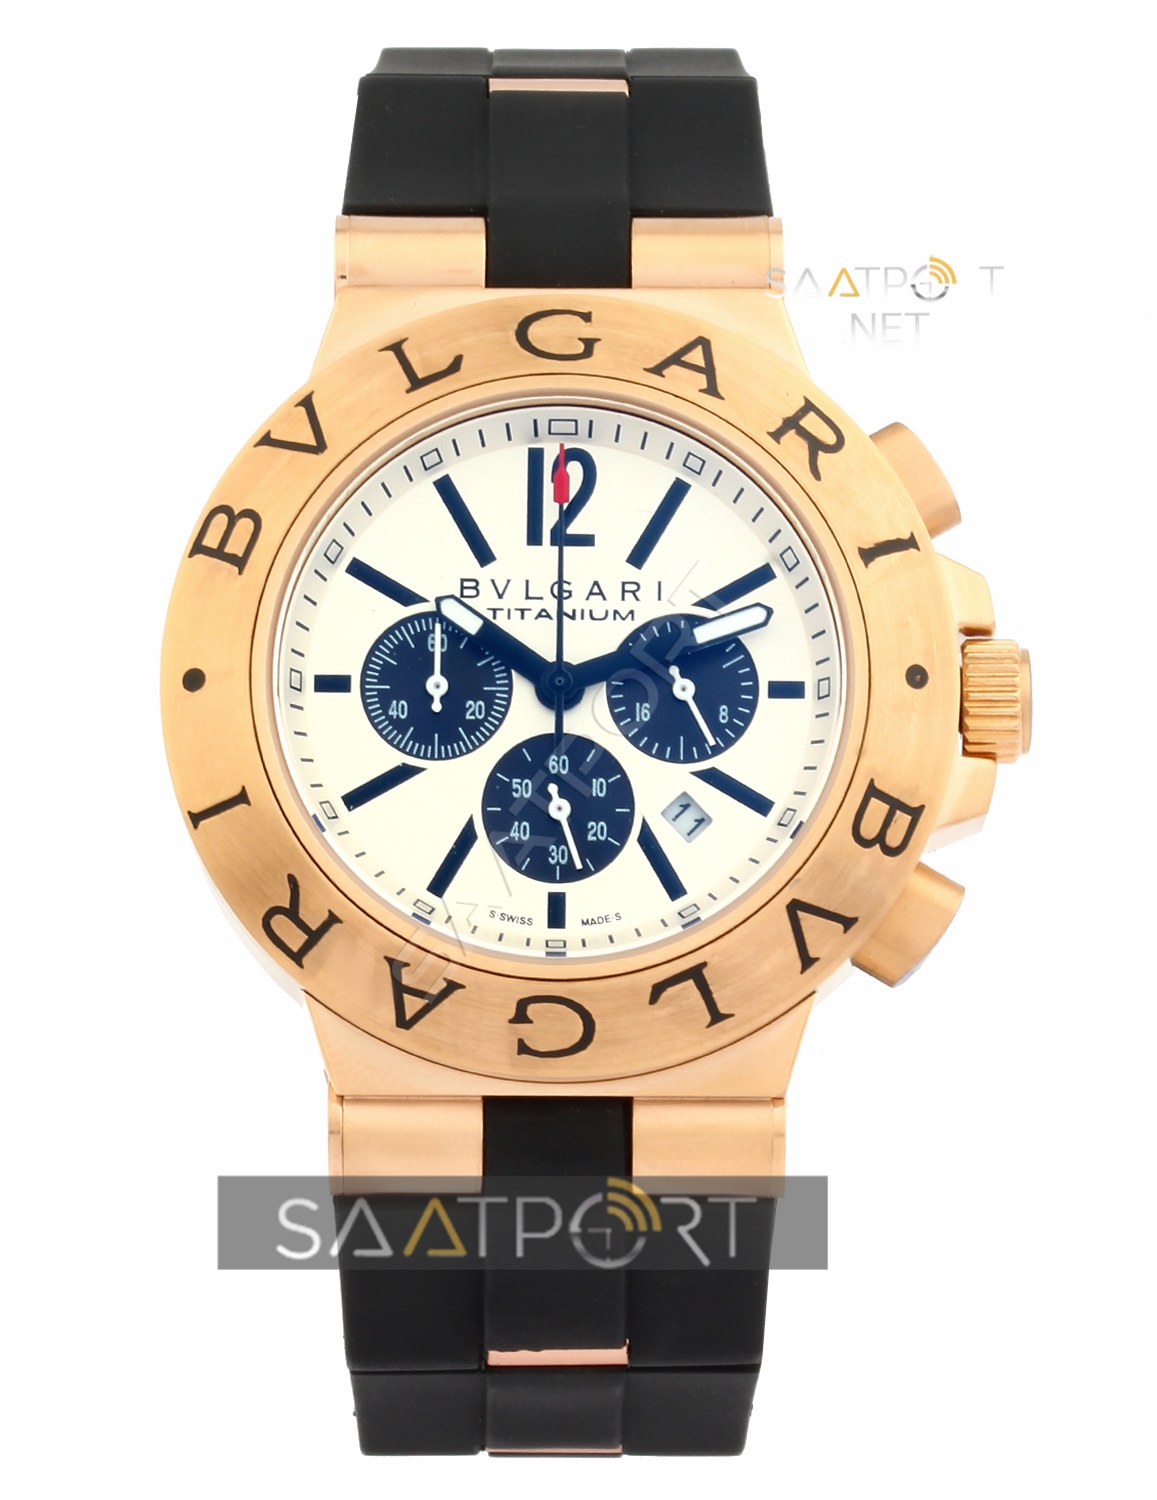 Bulgari Bvlgari Diagono Titanium - Saatport - Replika Saatler - Eta Saat  Mağazası - Rolex Saat